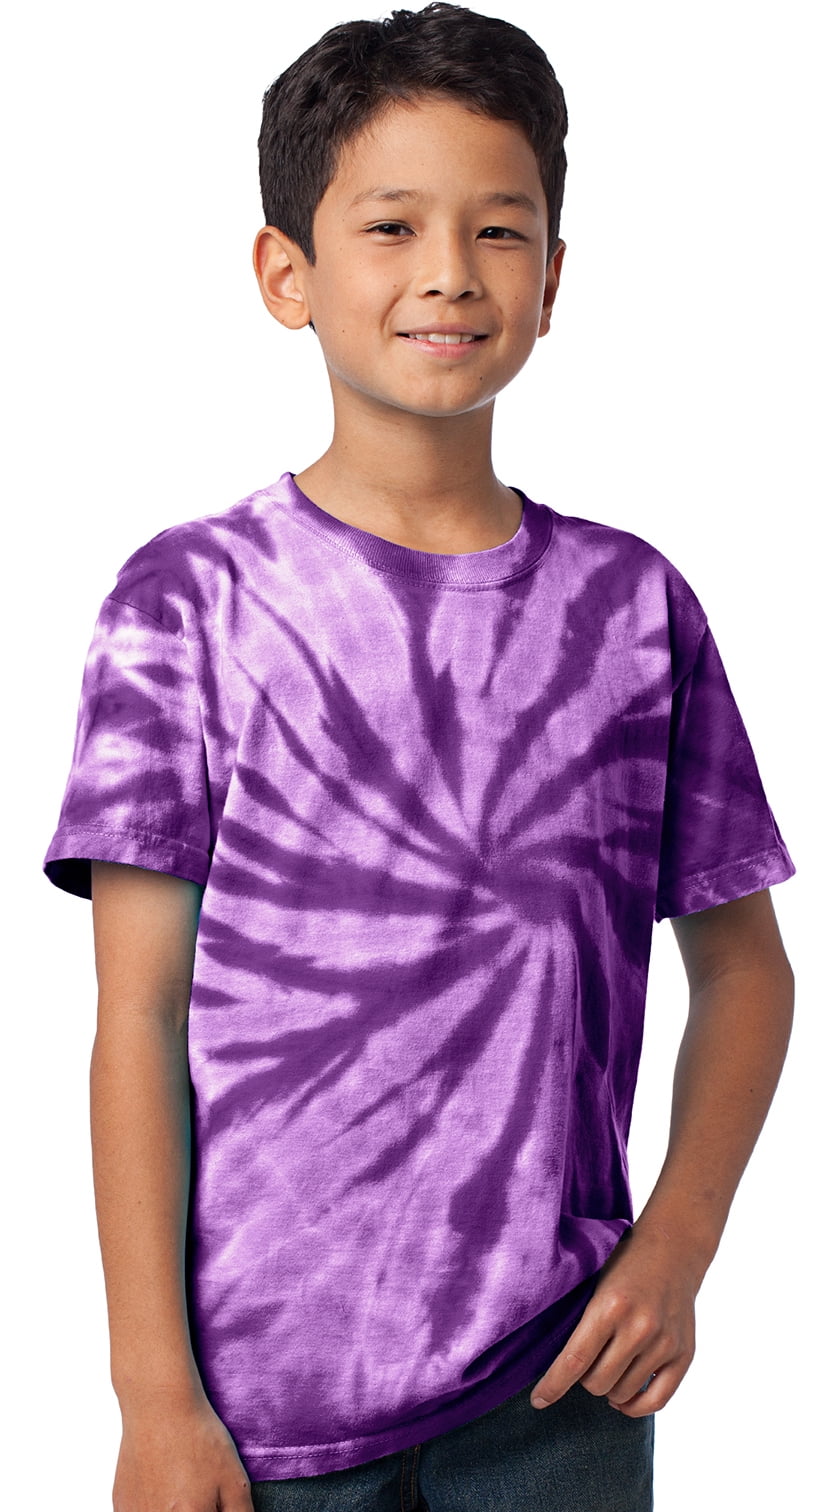 Purple and Black Tie Dye T-shirt, Youth XS S M L XL, Boys Tie Dye Shirt,  Girls Tie Dye Shirt, Tie Dye Tee, Hippie Shirt